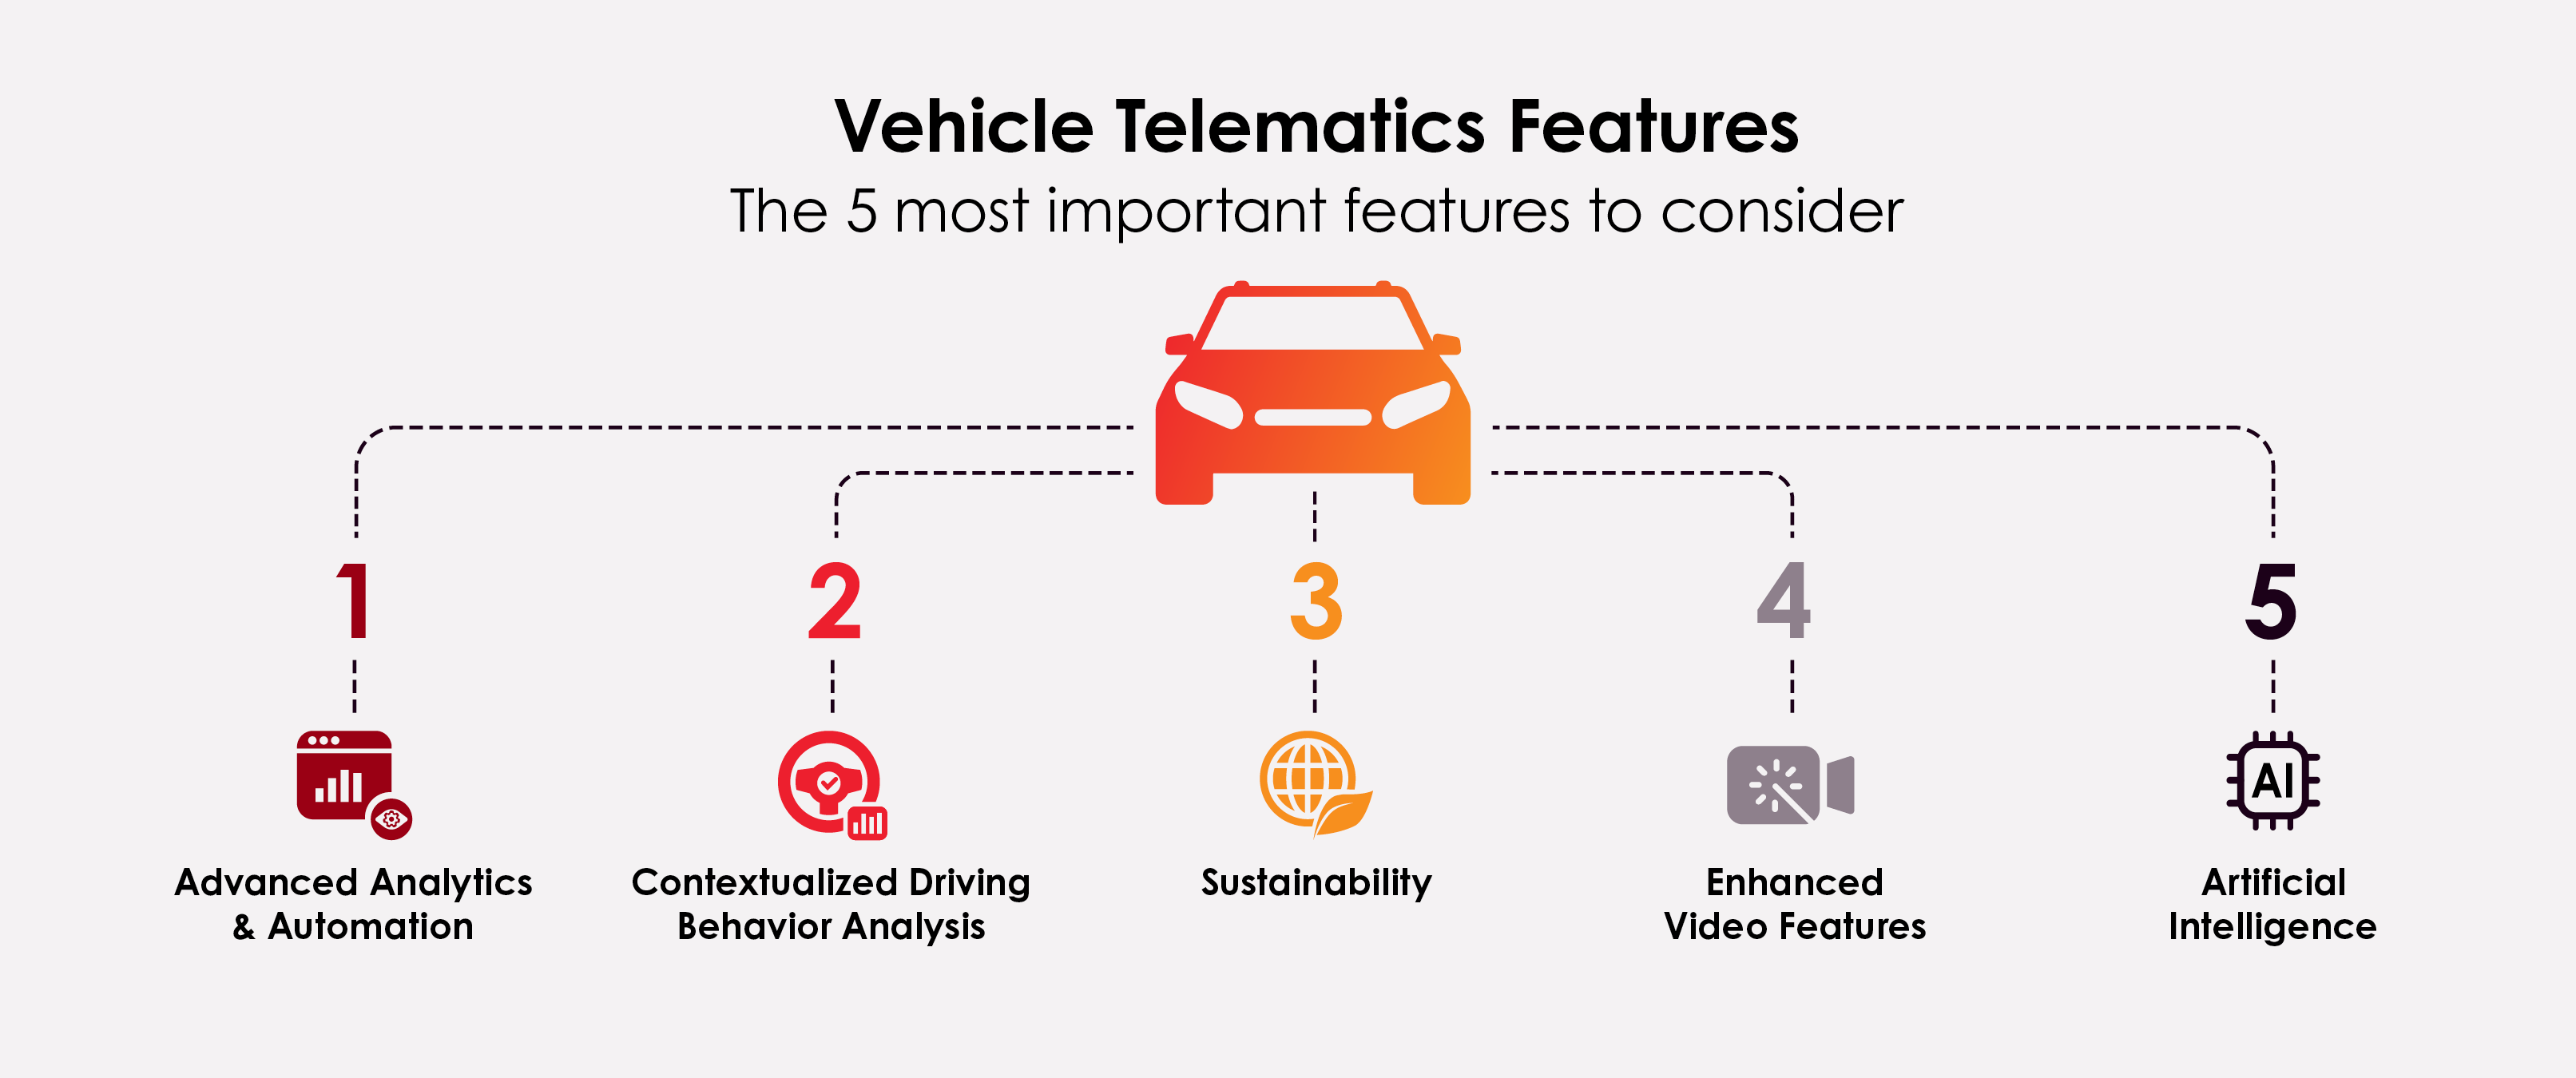 Vehicle Telematics Features